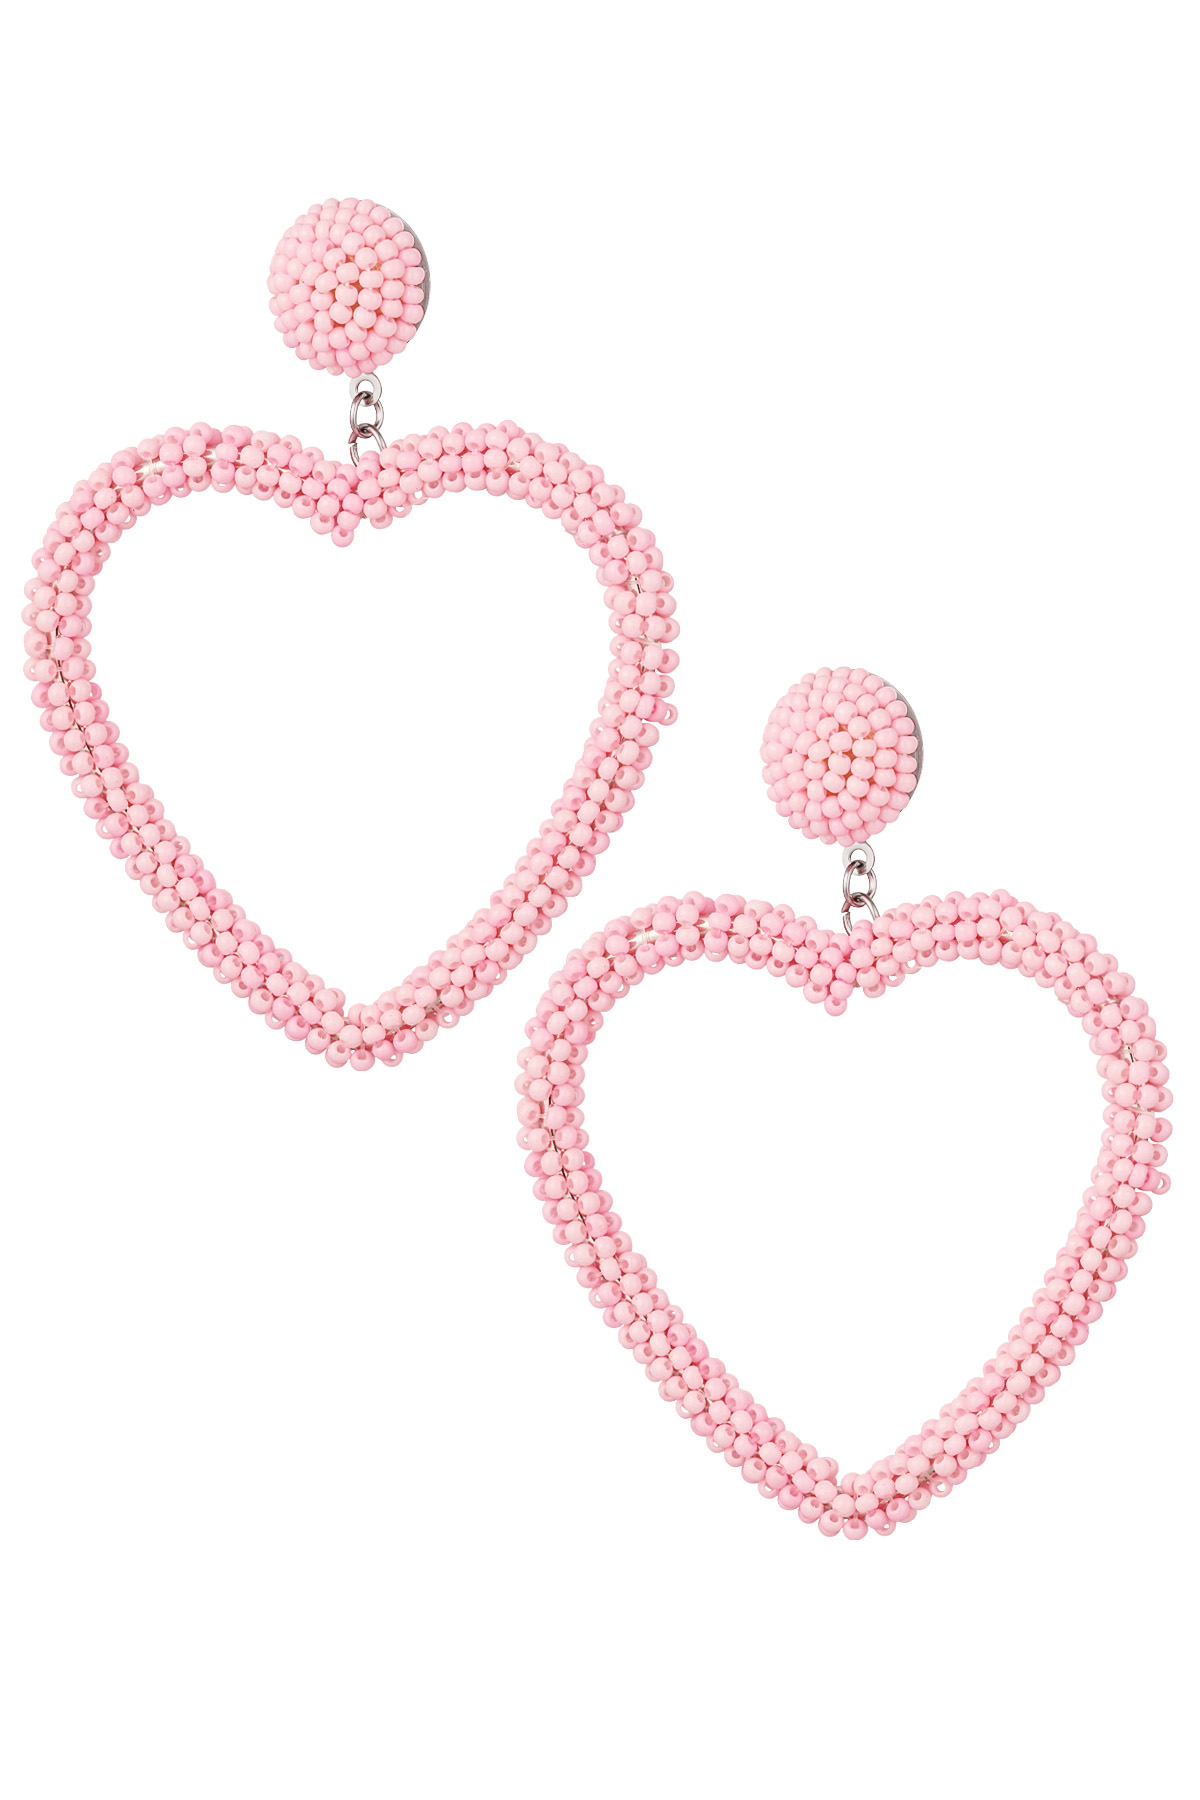 Ohrringe Perlen Candy - pastellrosa Edelstahl 